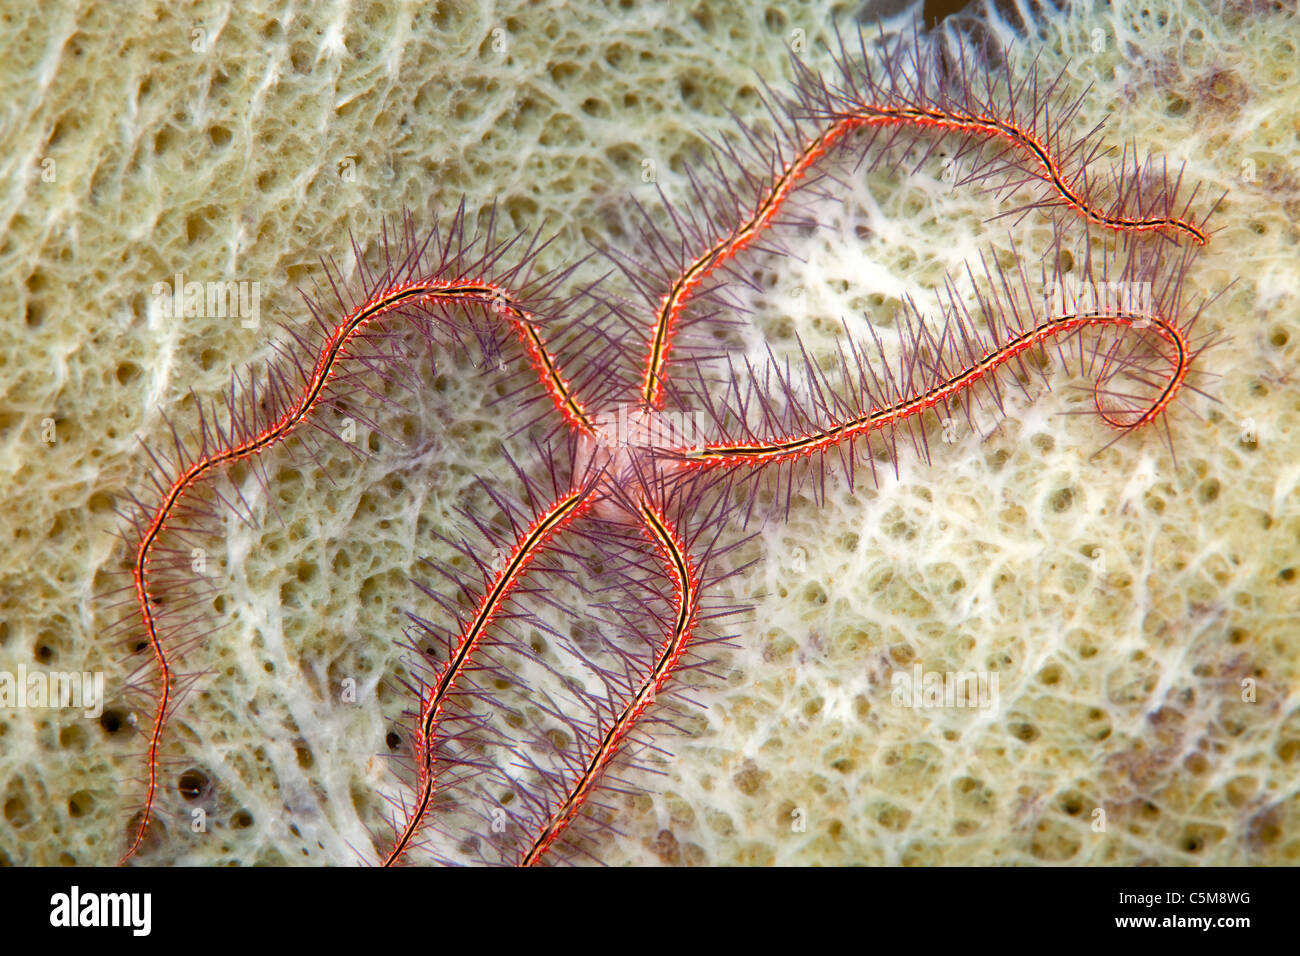 A sponge brittle star (Ophiothrix suensonii). Taken at Roatan, a tropical island off the coast of Honduras. Stock Photo